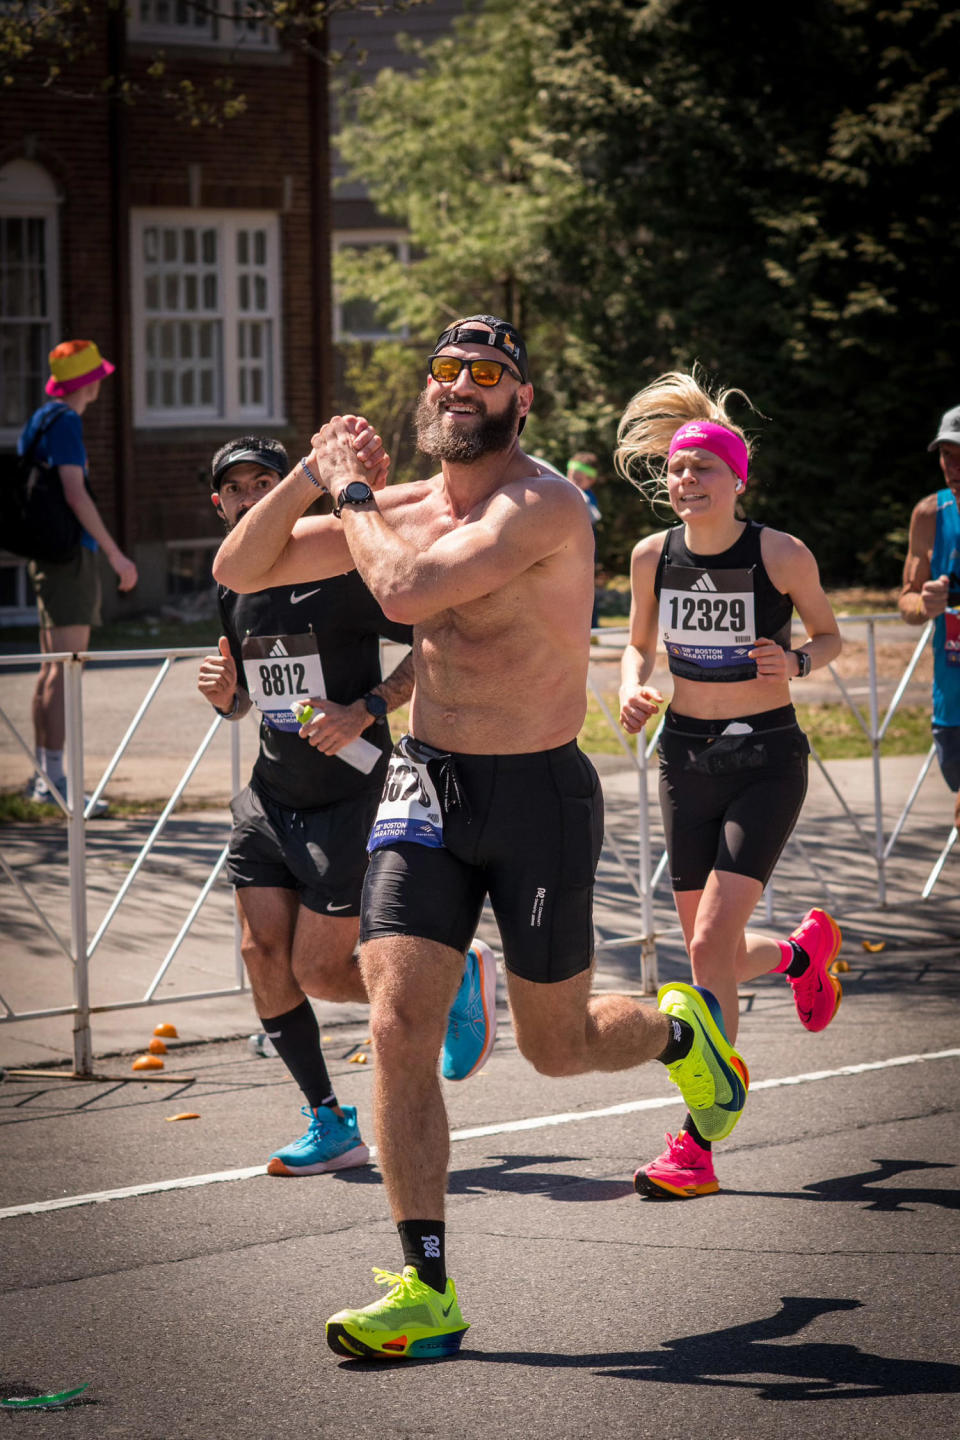 Yosef running in a race (Sarah Stafford)